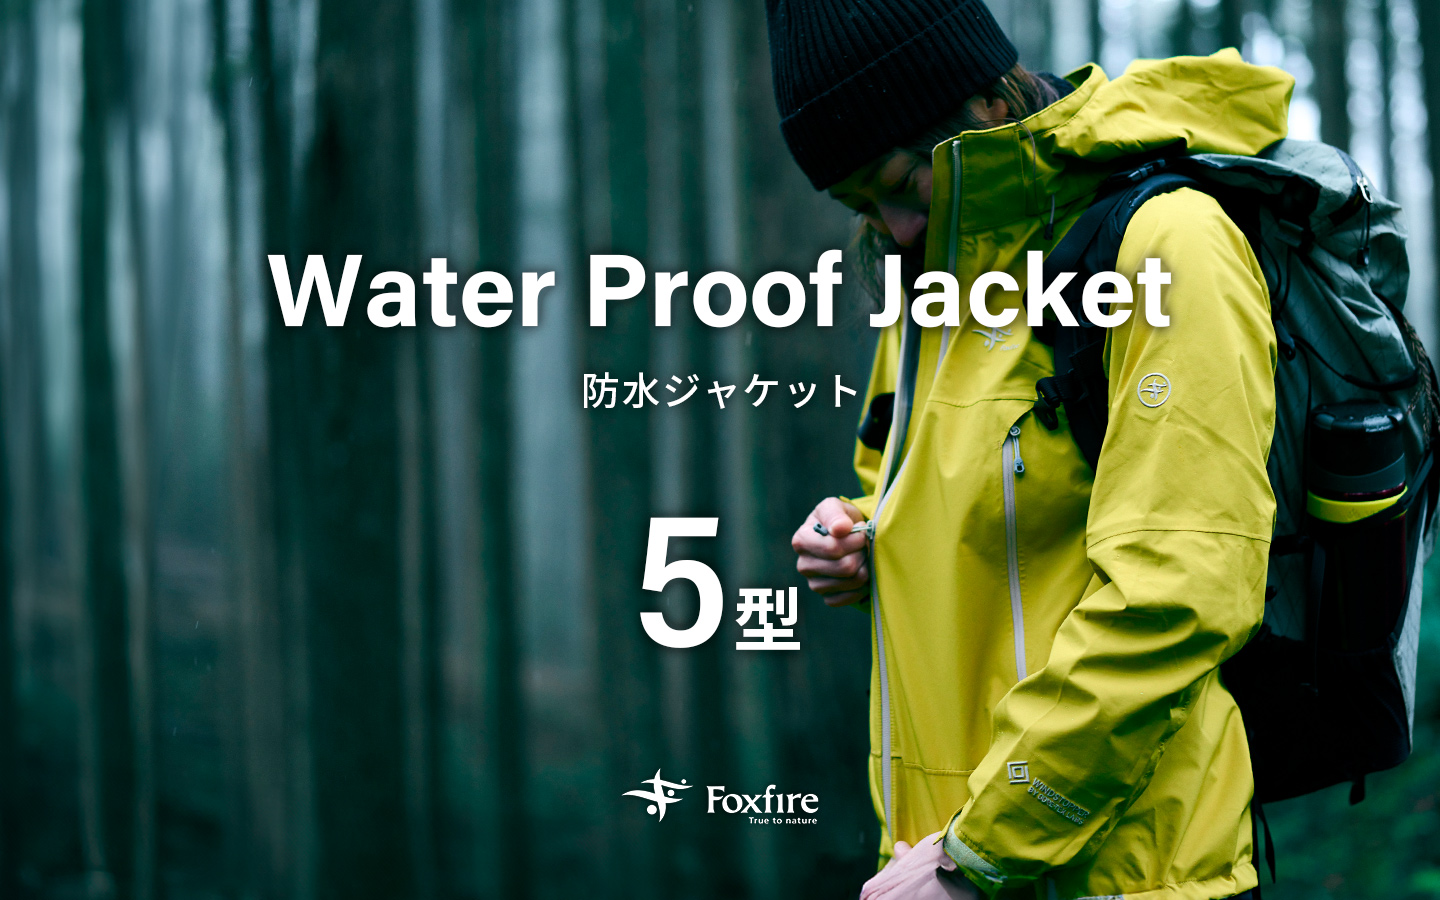 Foxfire Waterproof Jacket】梅雨こそ快適なアウトドアを。 / 特集記事 